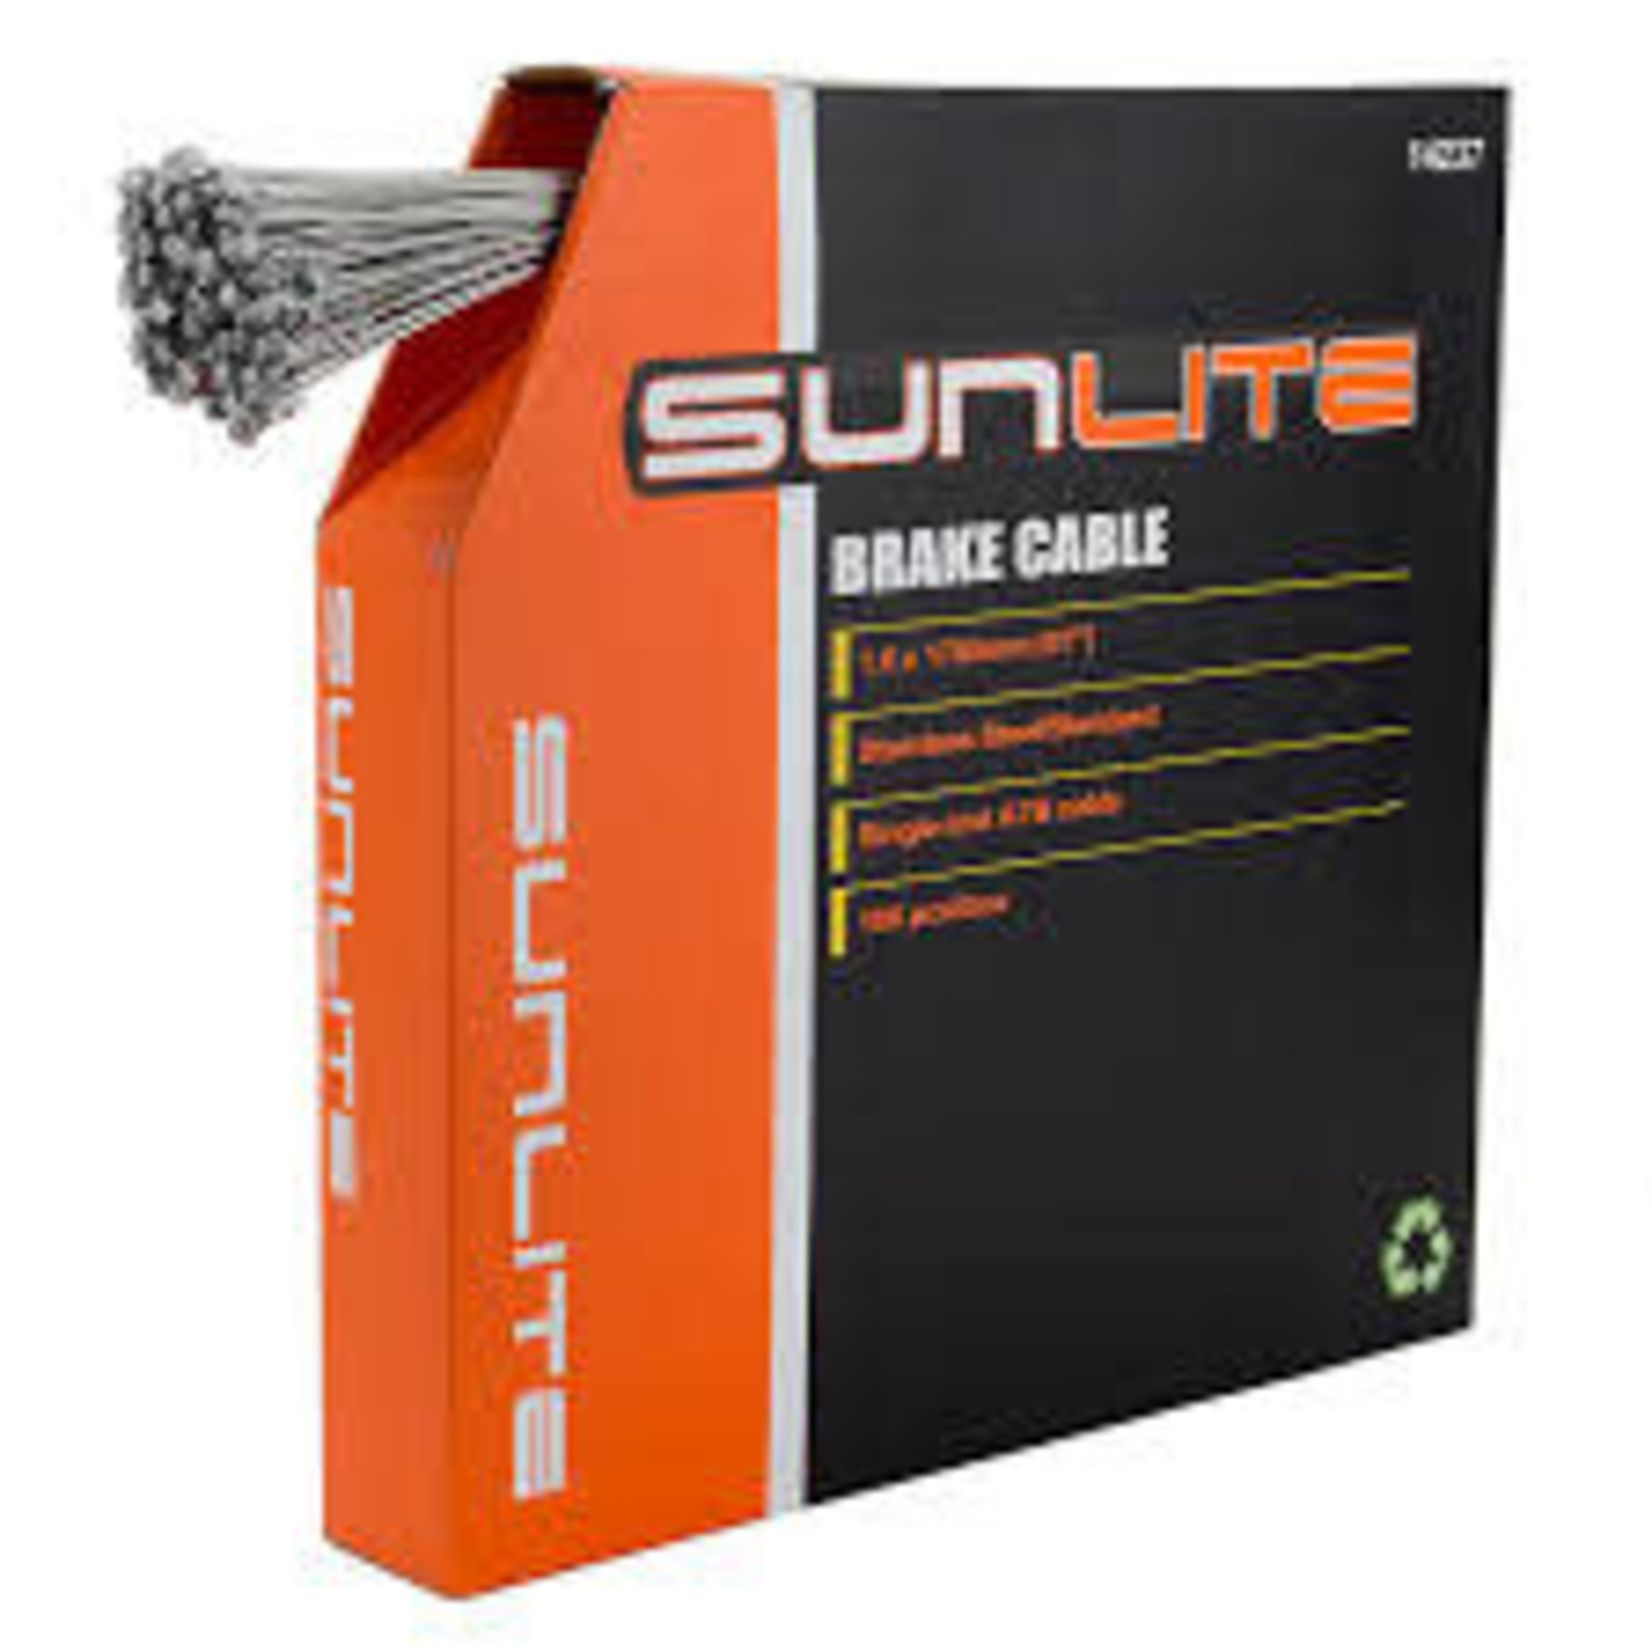 Cable Brake Sunlight BXof100